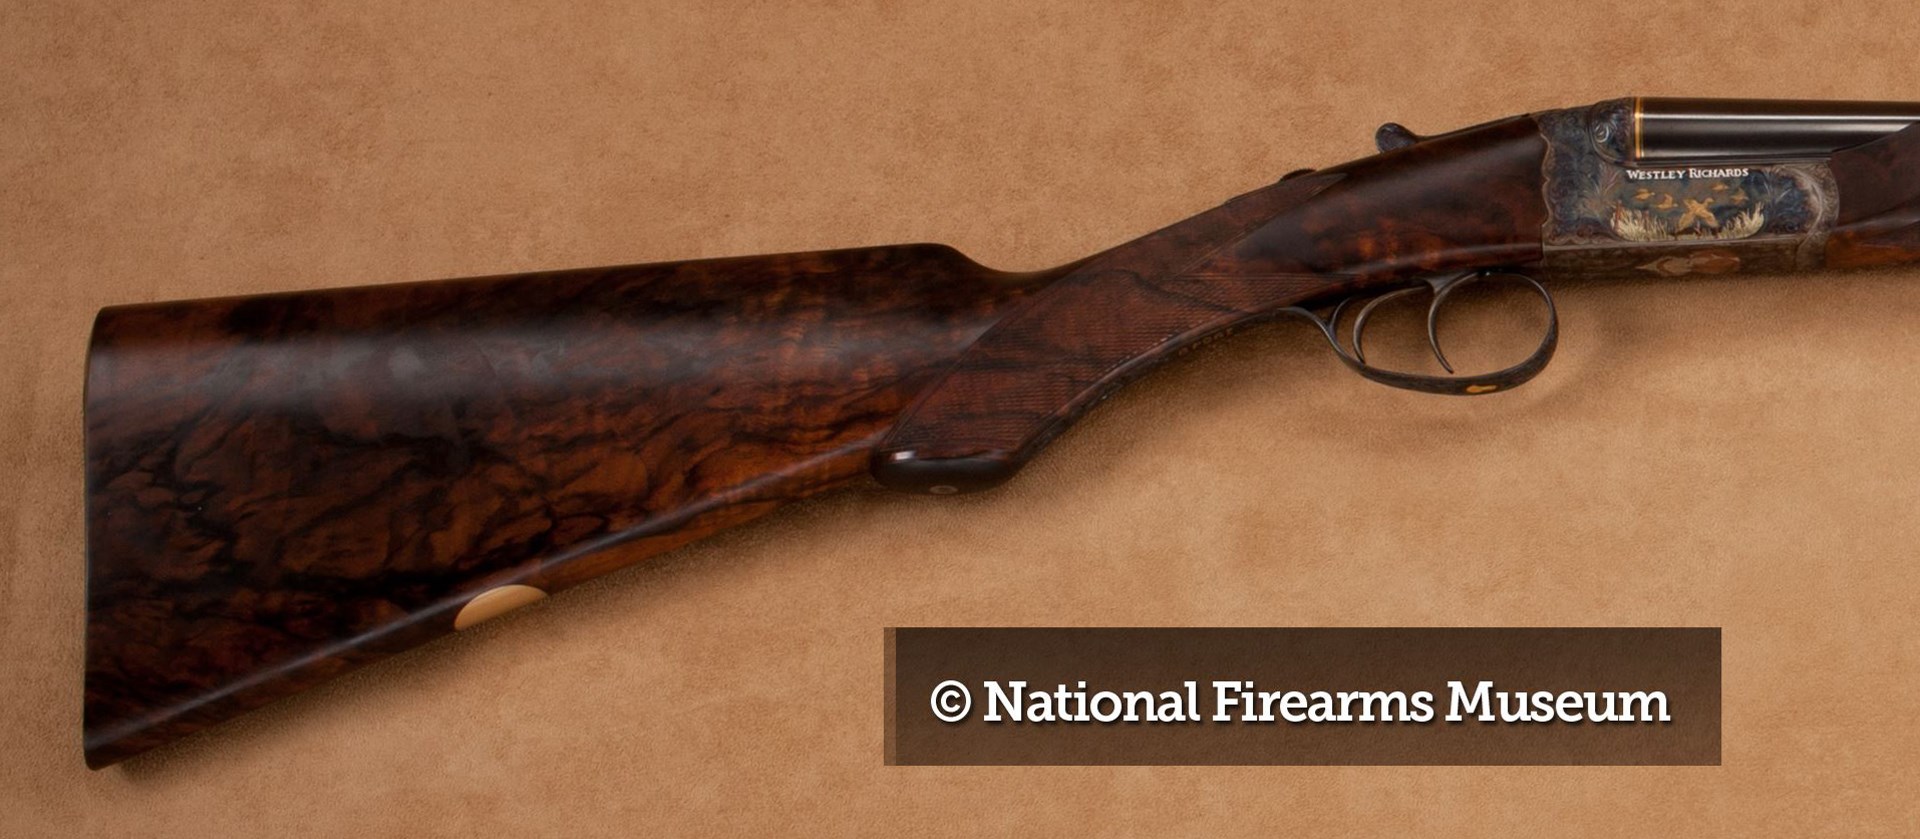 Westley Richards James Woodward & Sons grip profile wood shape gun parts buttstock walnut side-by-side shotgun copywrite national firearms museum